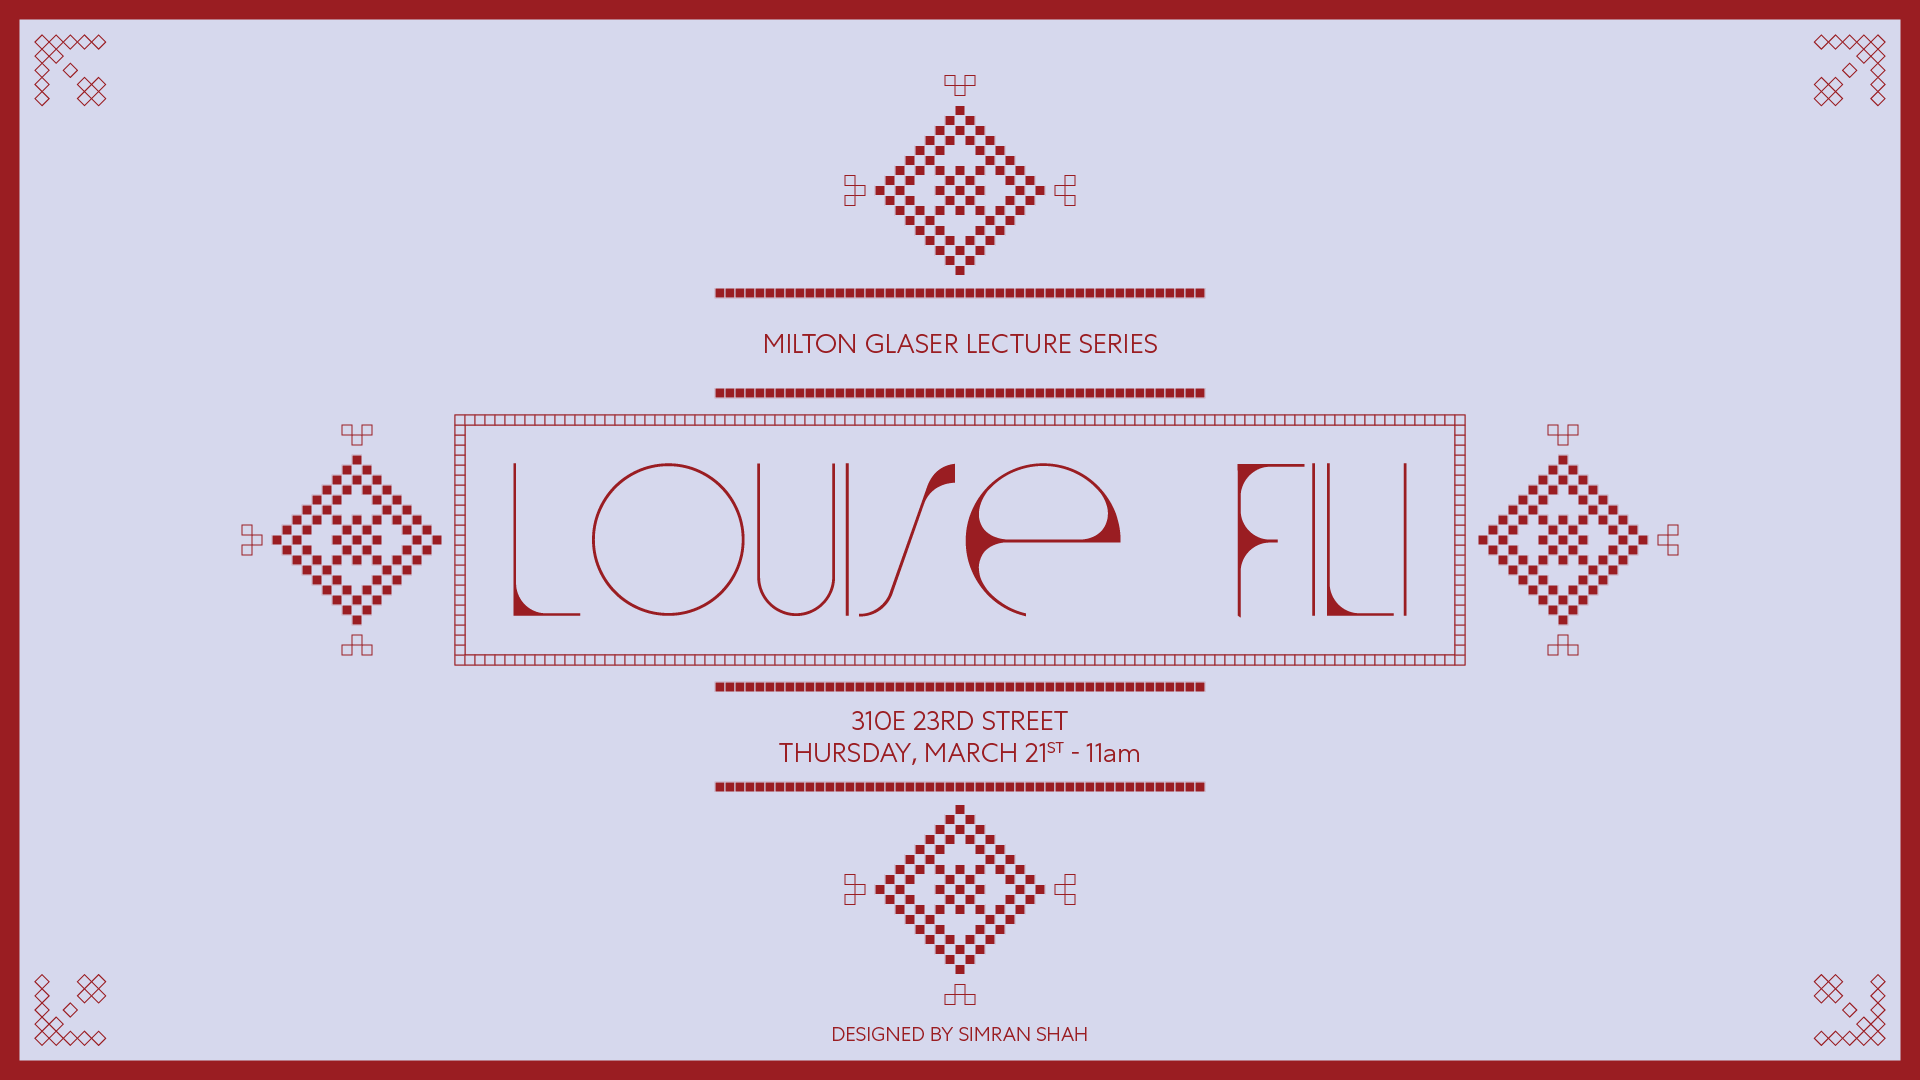 poster announcement for studio visit: Louise Fili